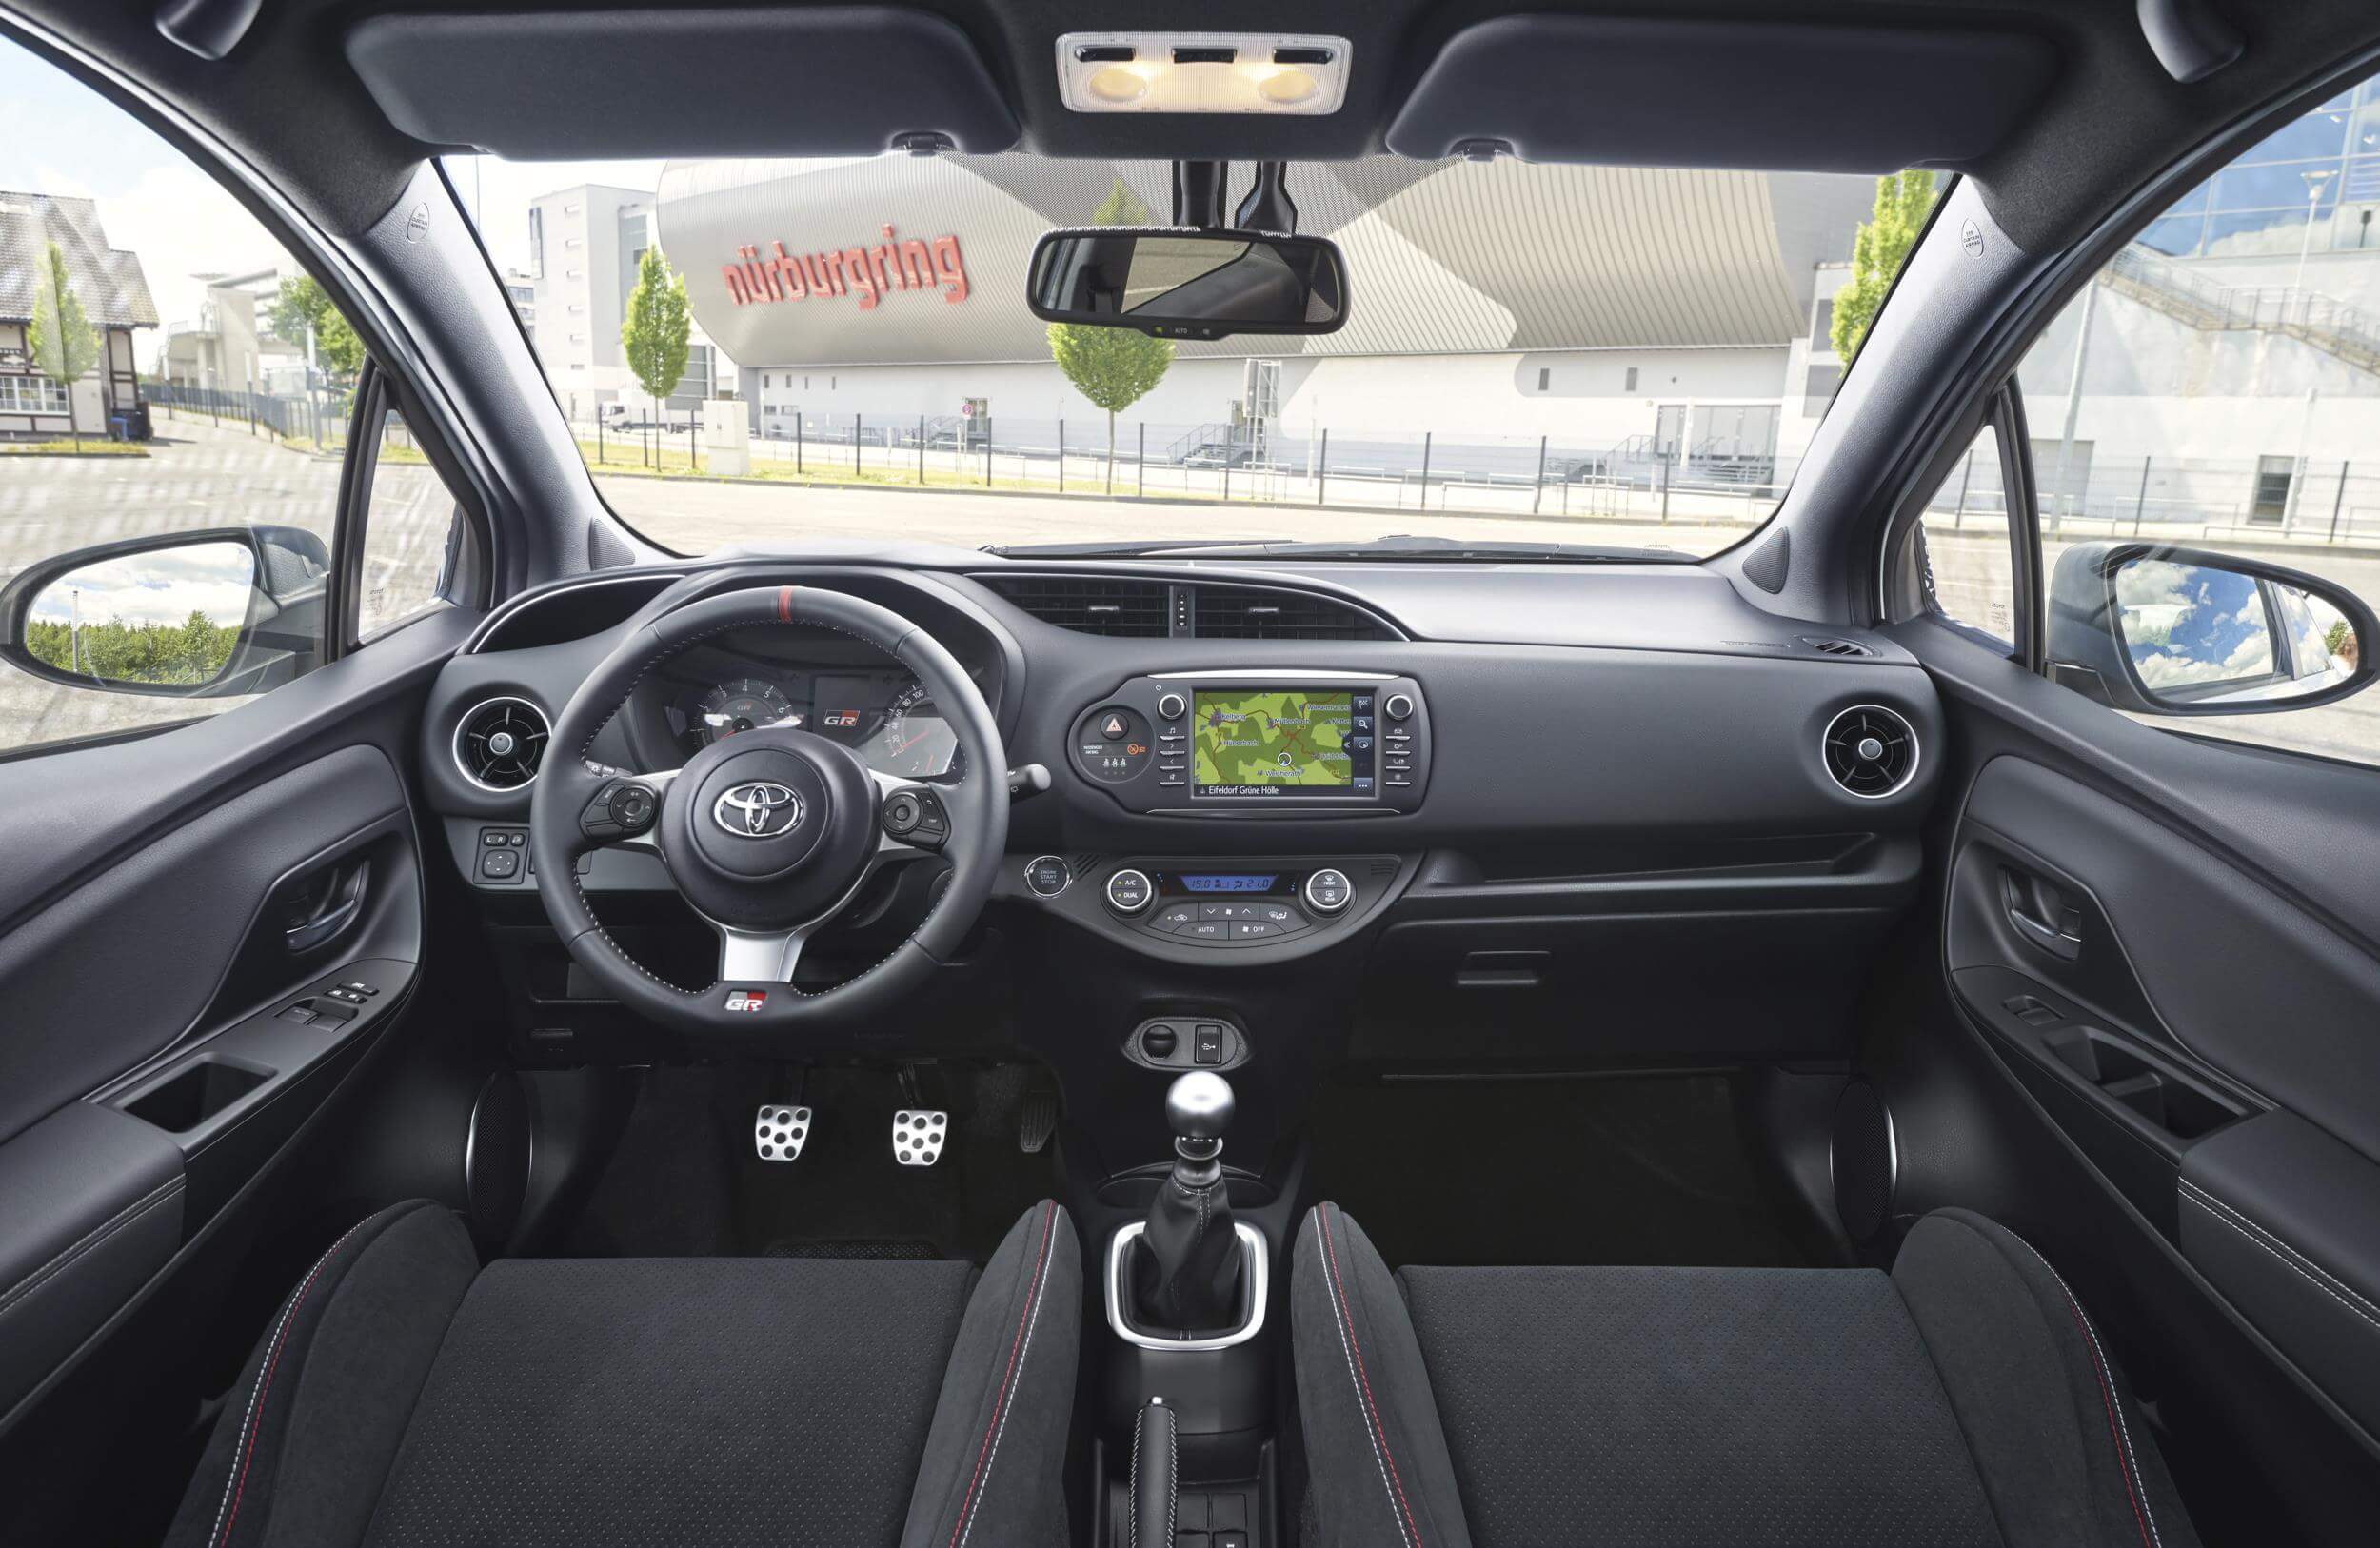 Toyota Yaris GRMN: interior